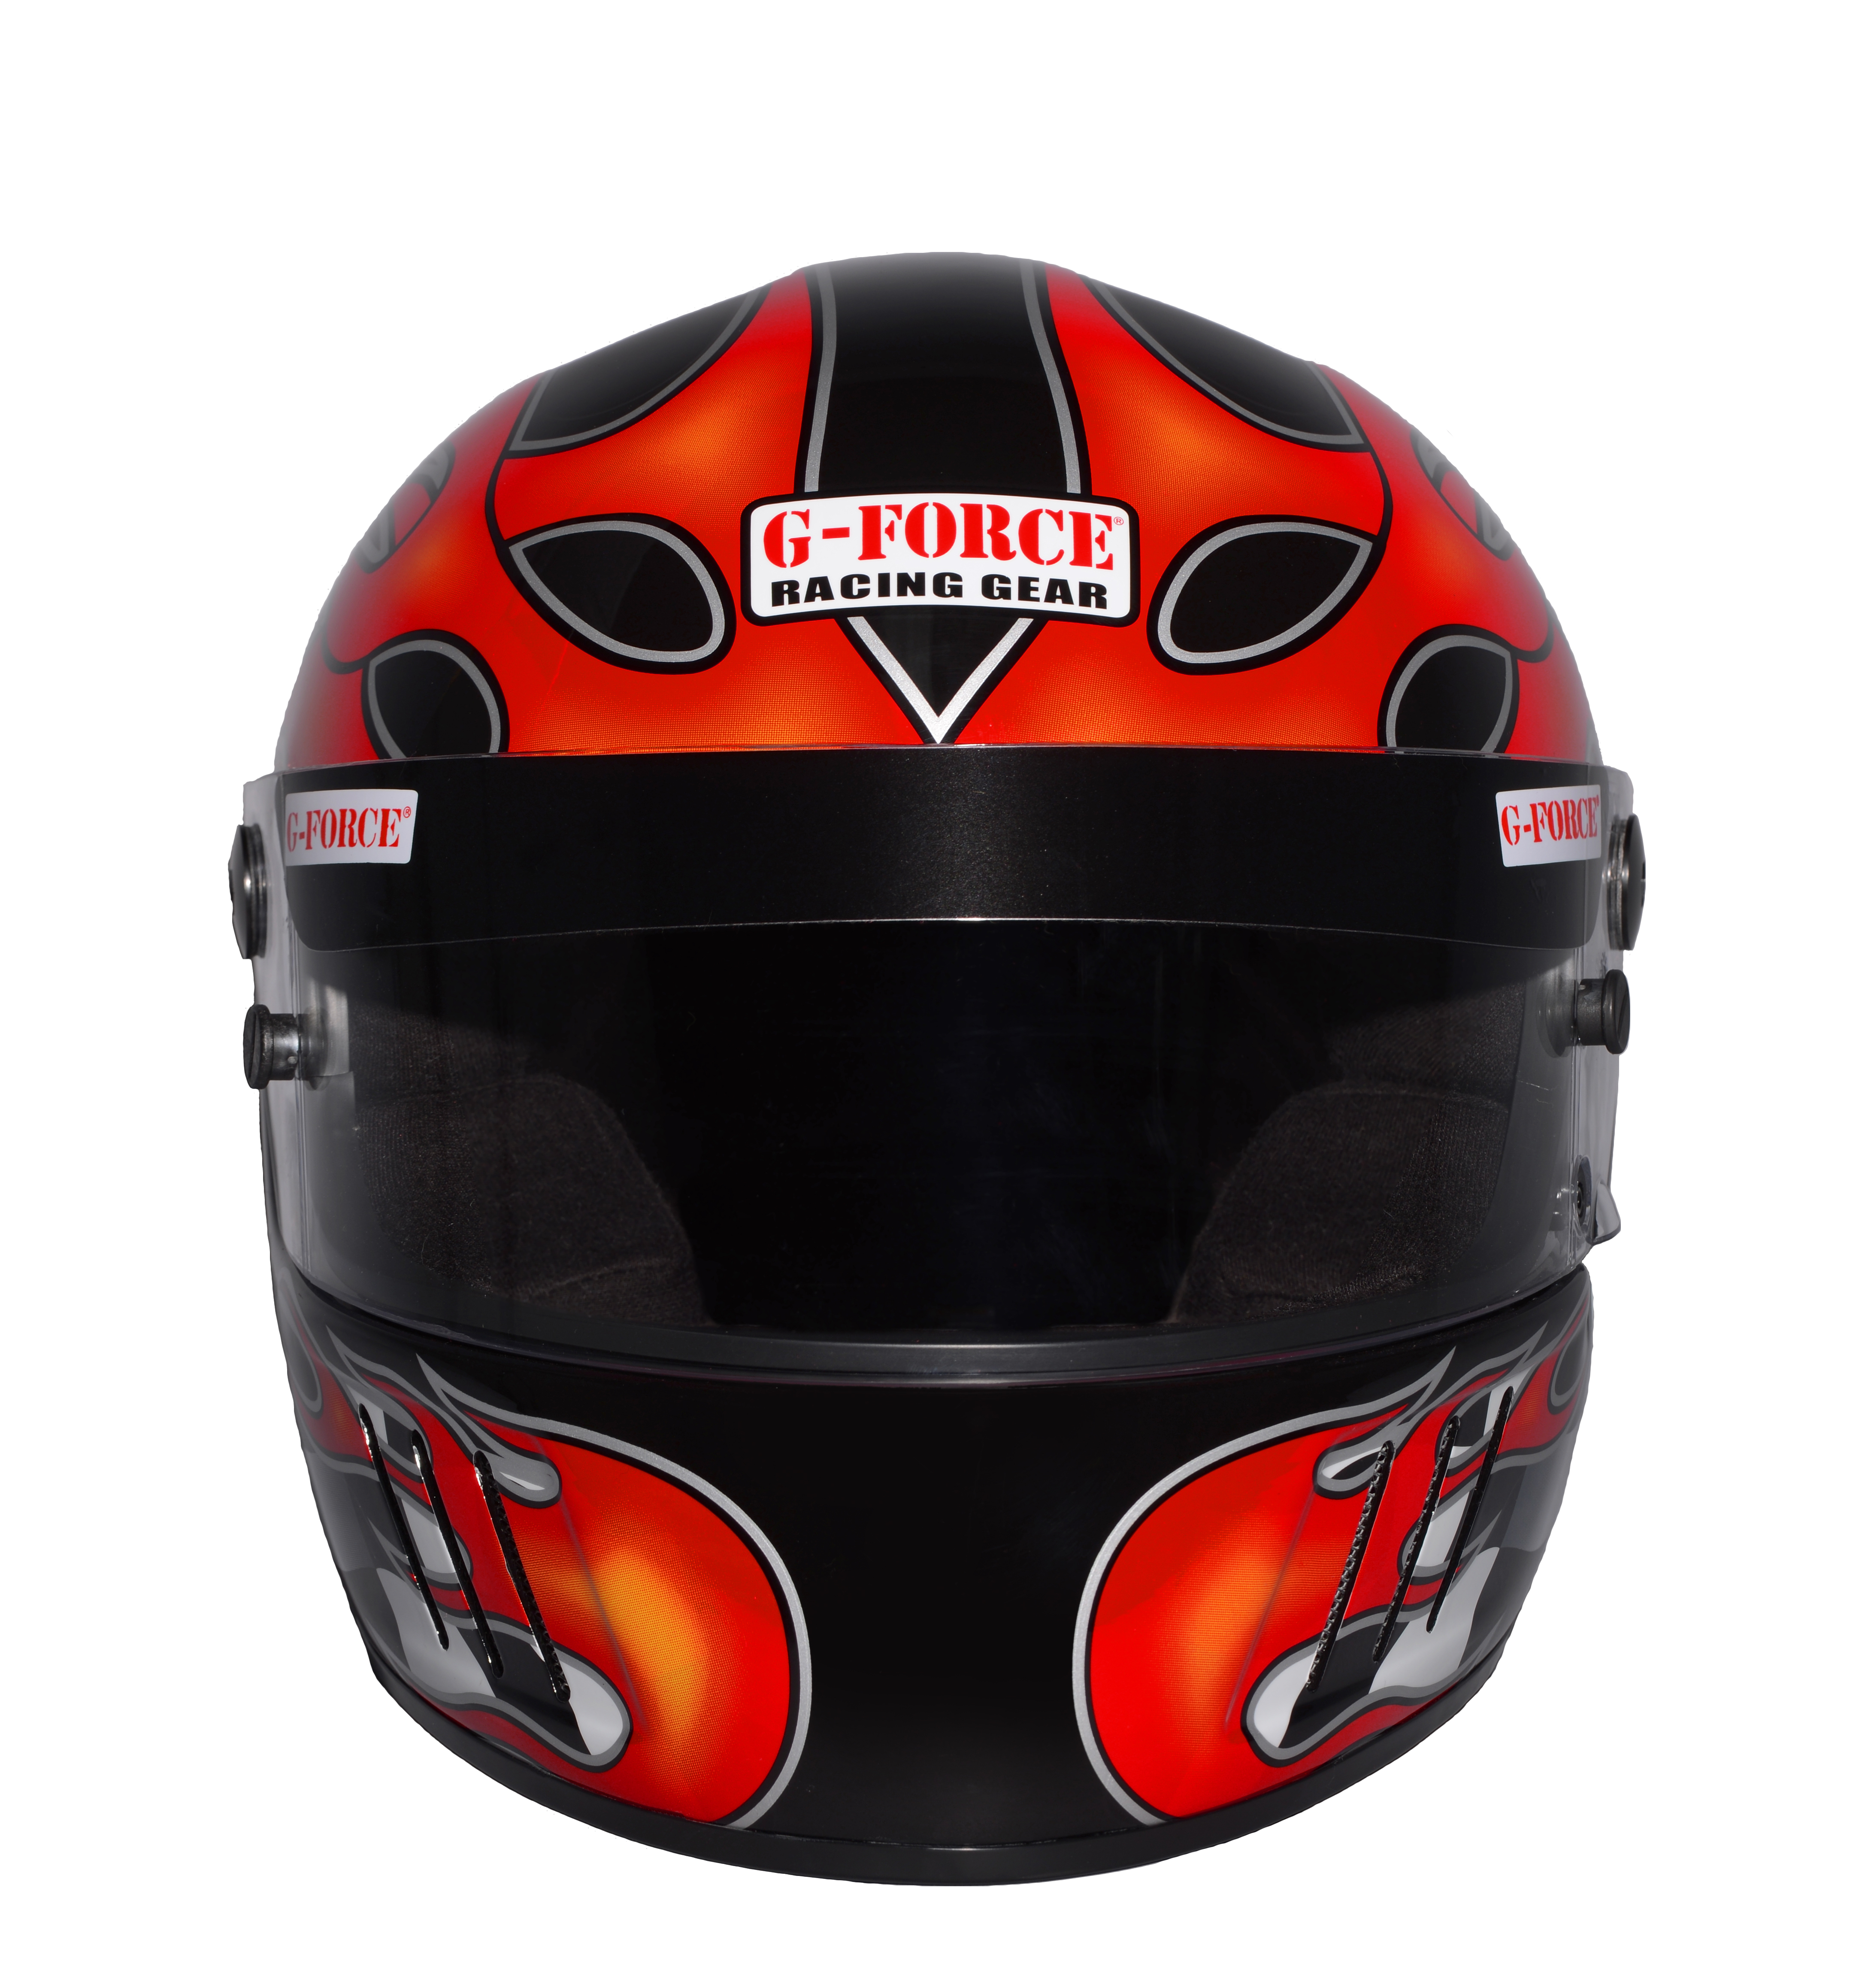 G-Force Racing Gear Helmet, PRO VINTAGE SA2010 FULL FACE LARGE BLACK